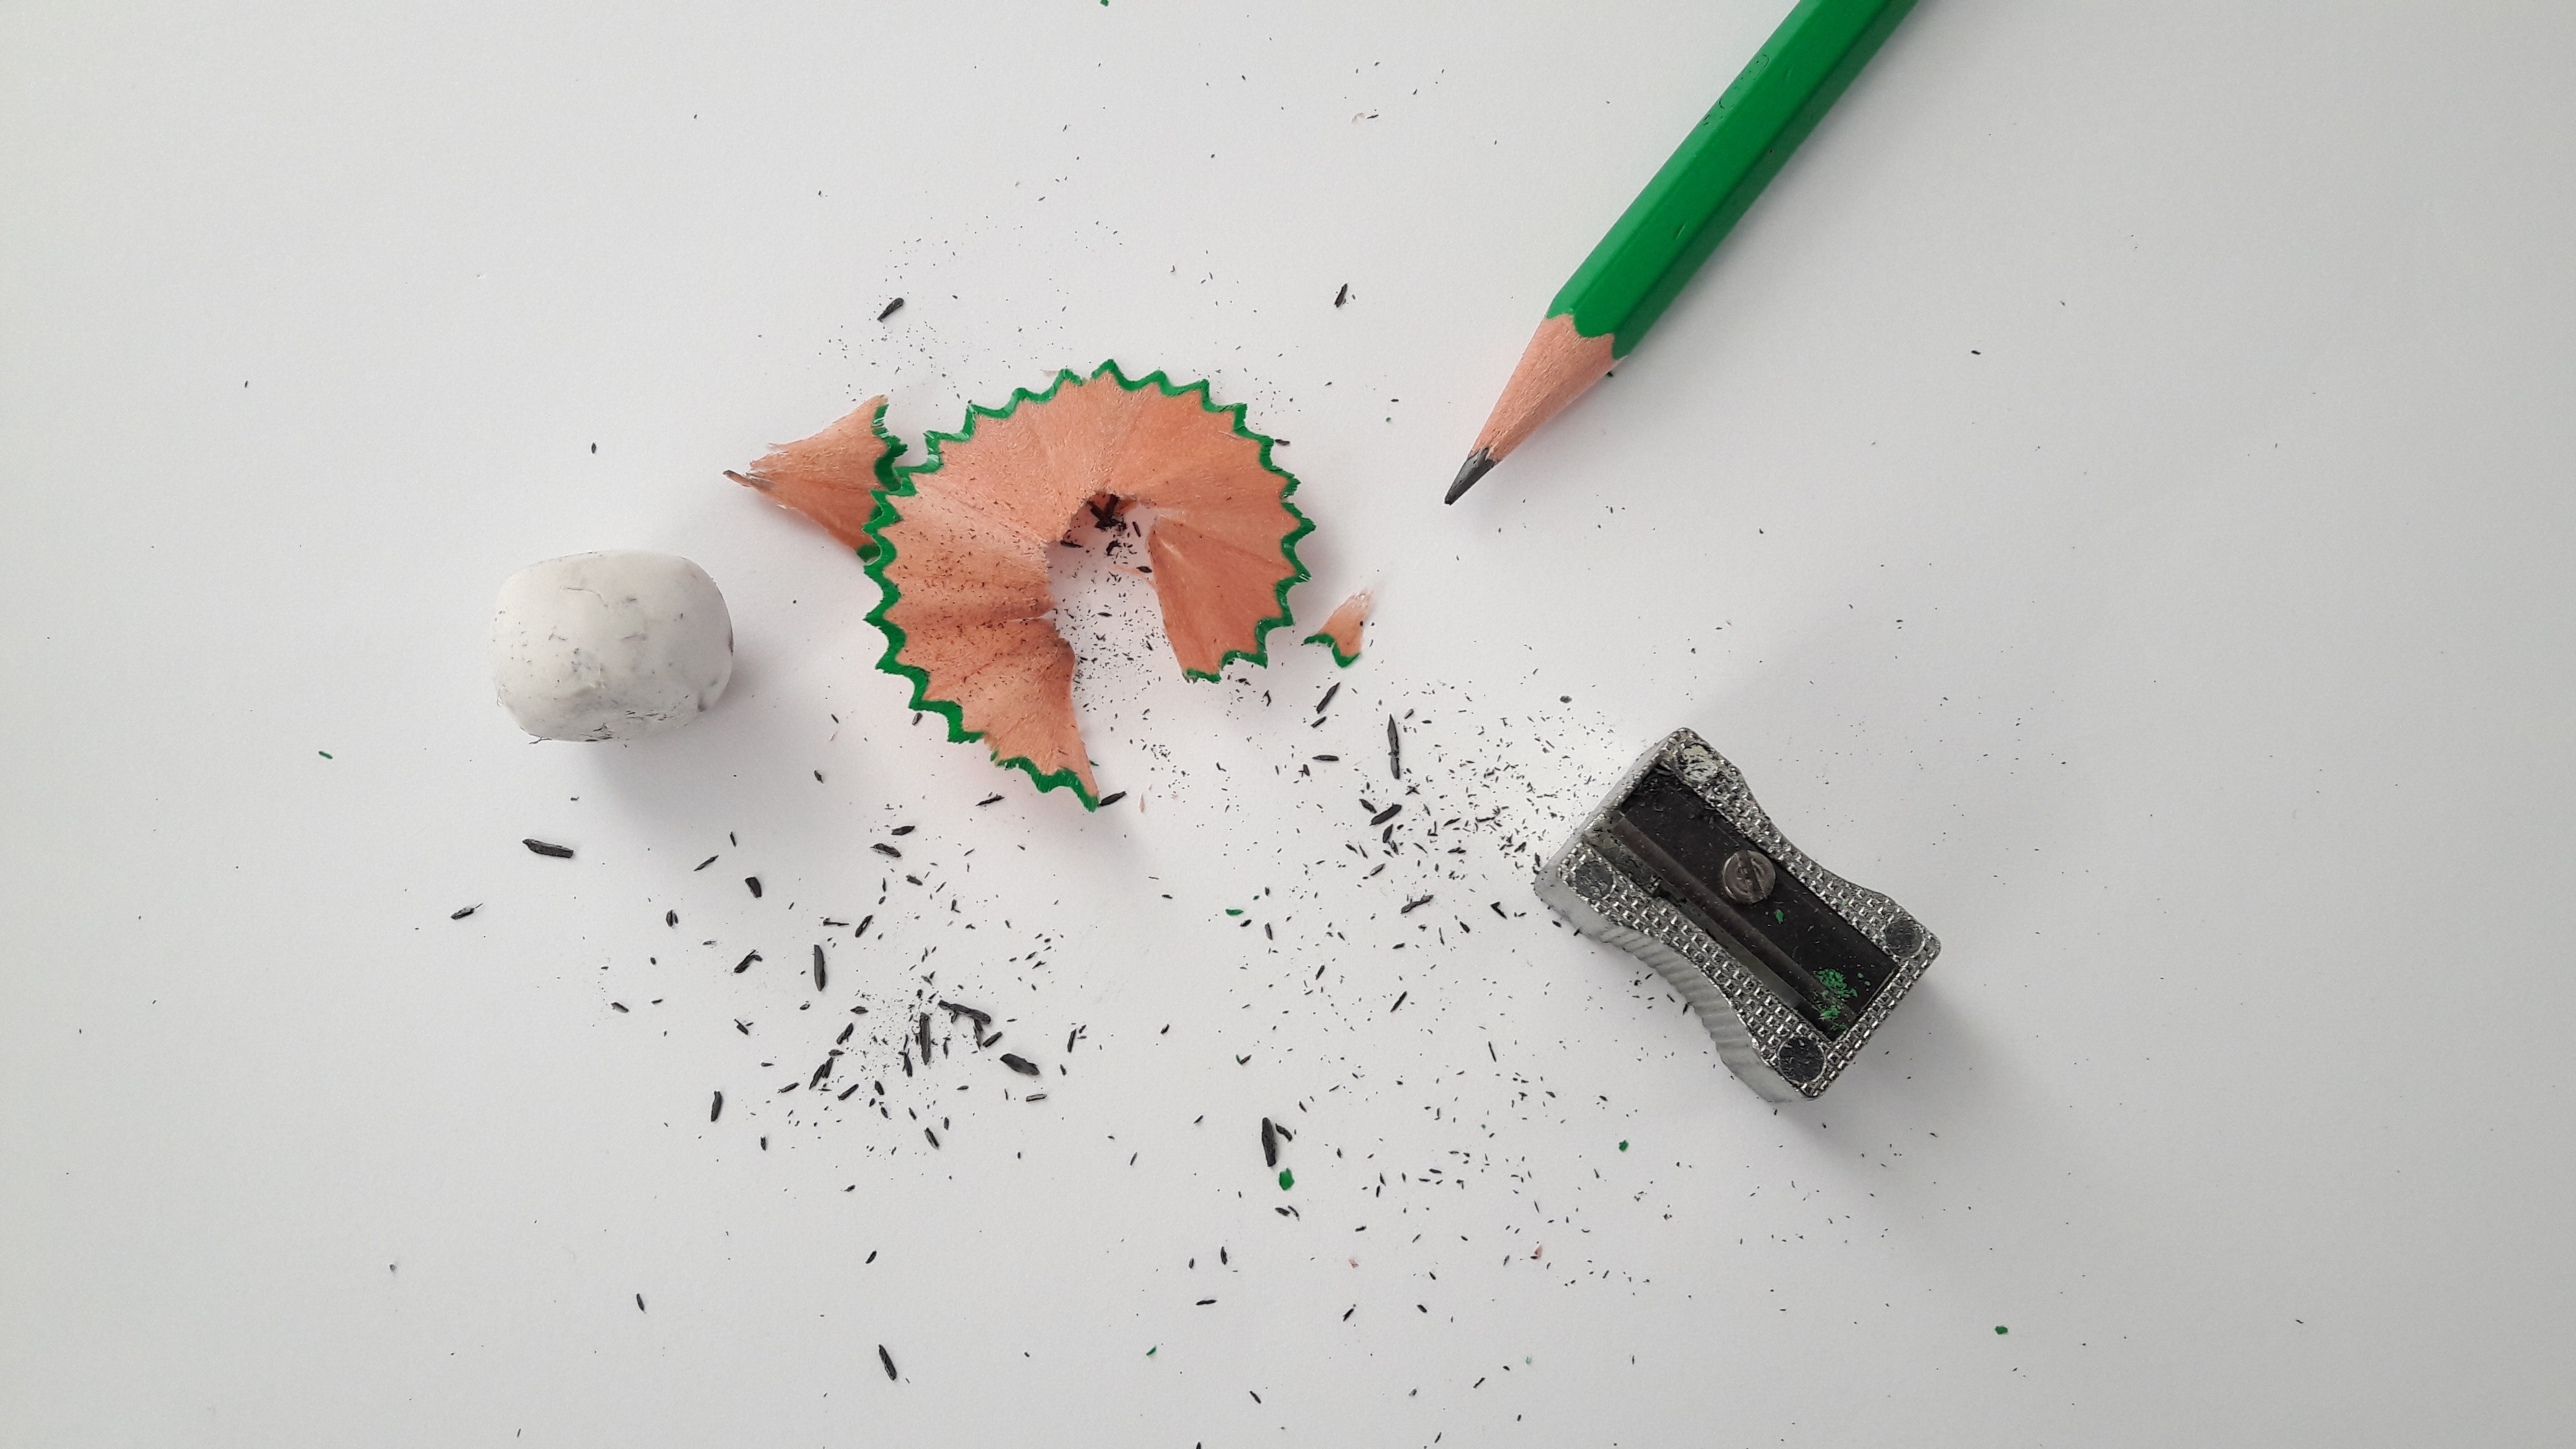 green pencil and gray sharpener